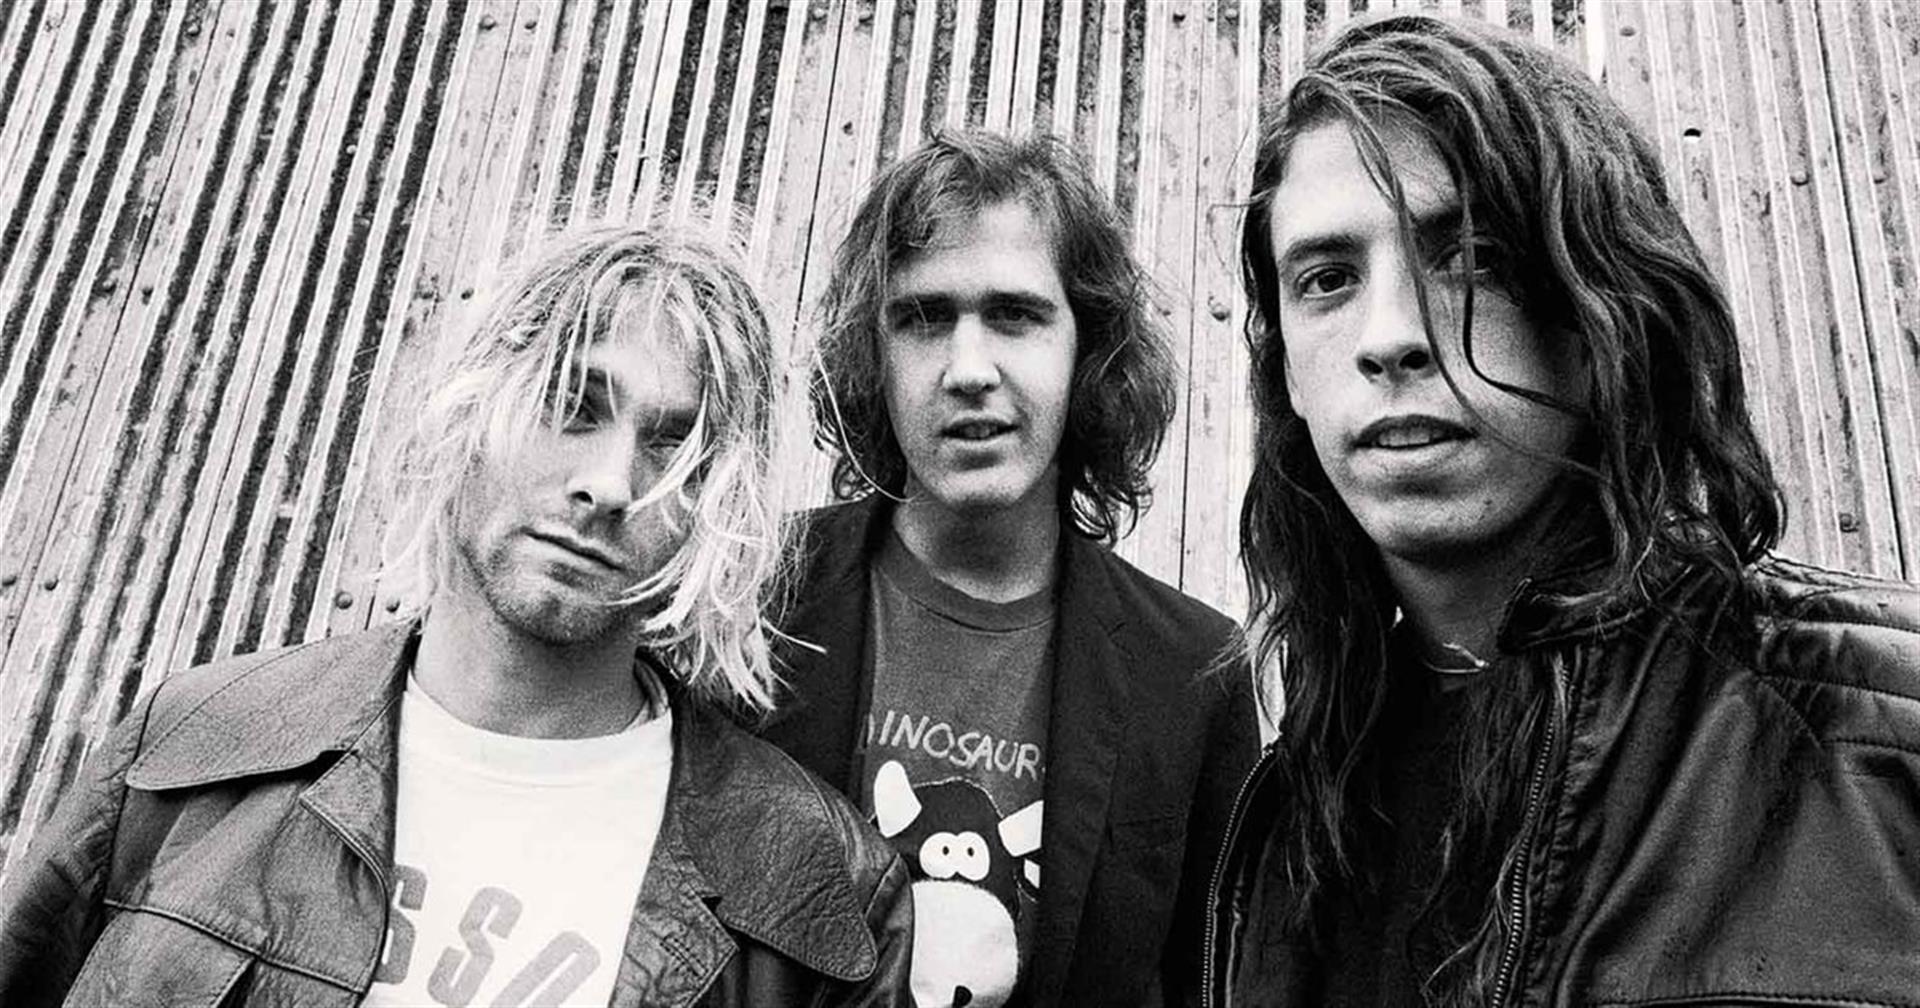 Love generation nirvana. Рок группа Нирвана. Группа Нирвана Кобейн. Nirvana Kurt Cobain. Курт Кобейн с группой.